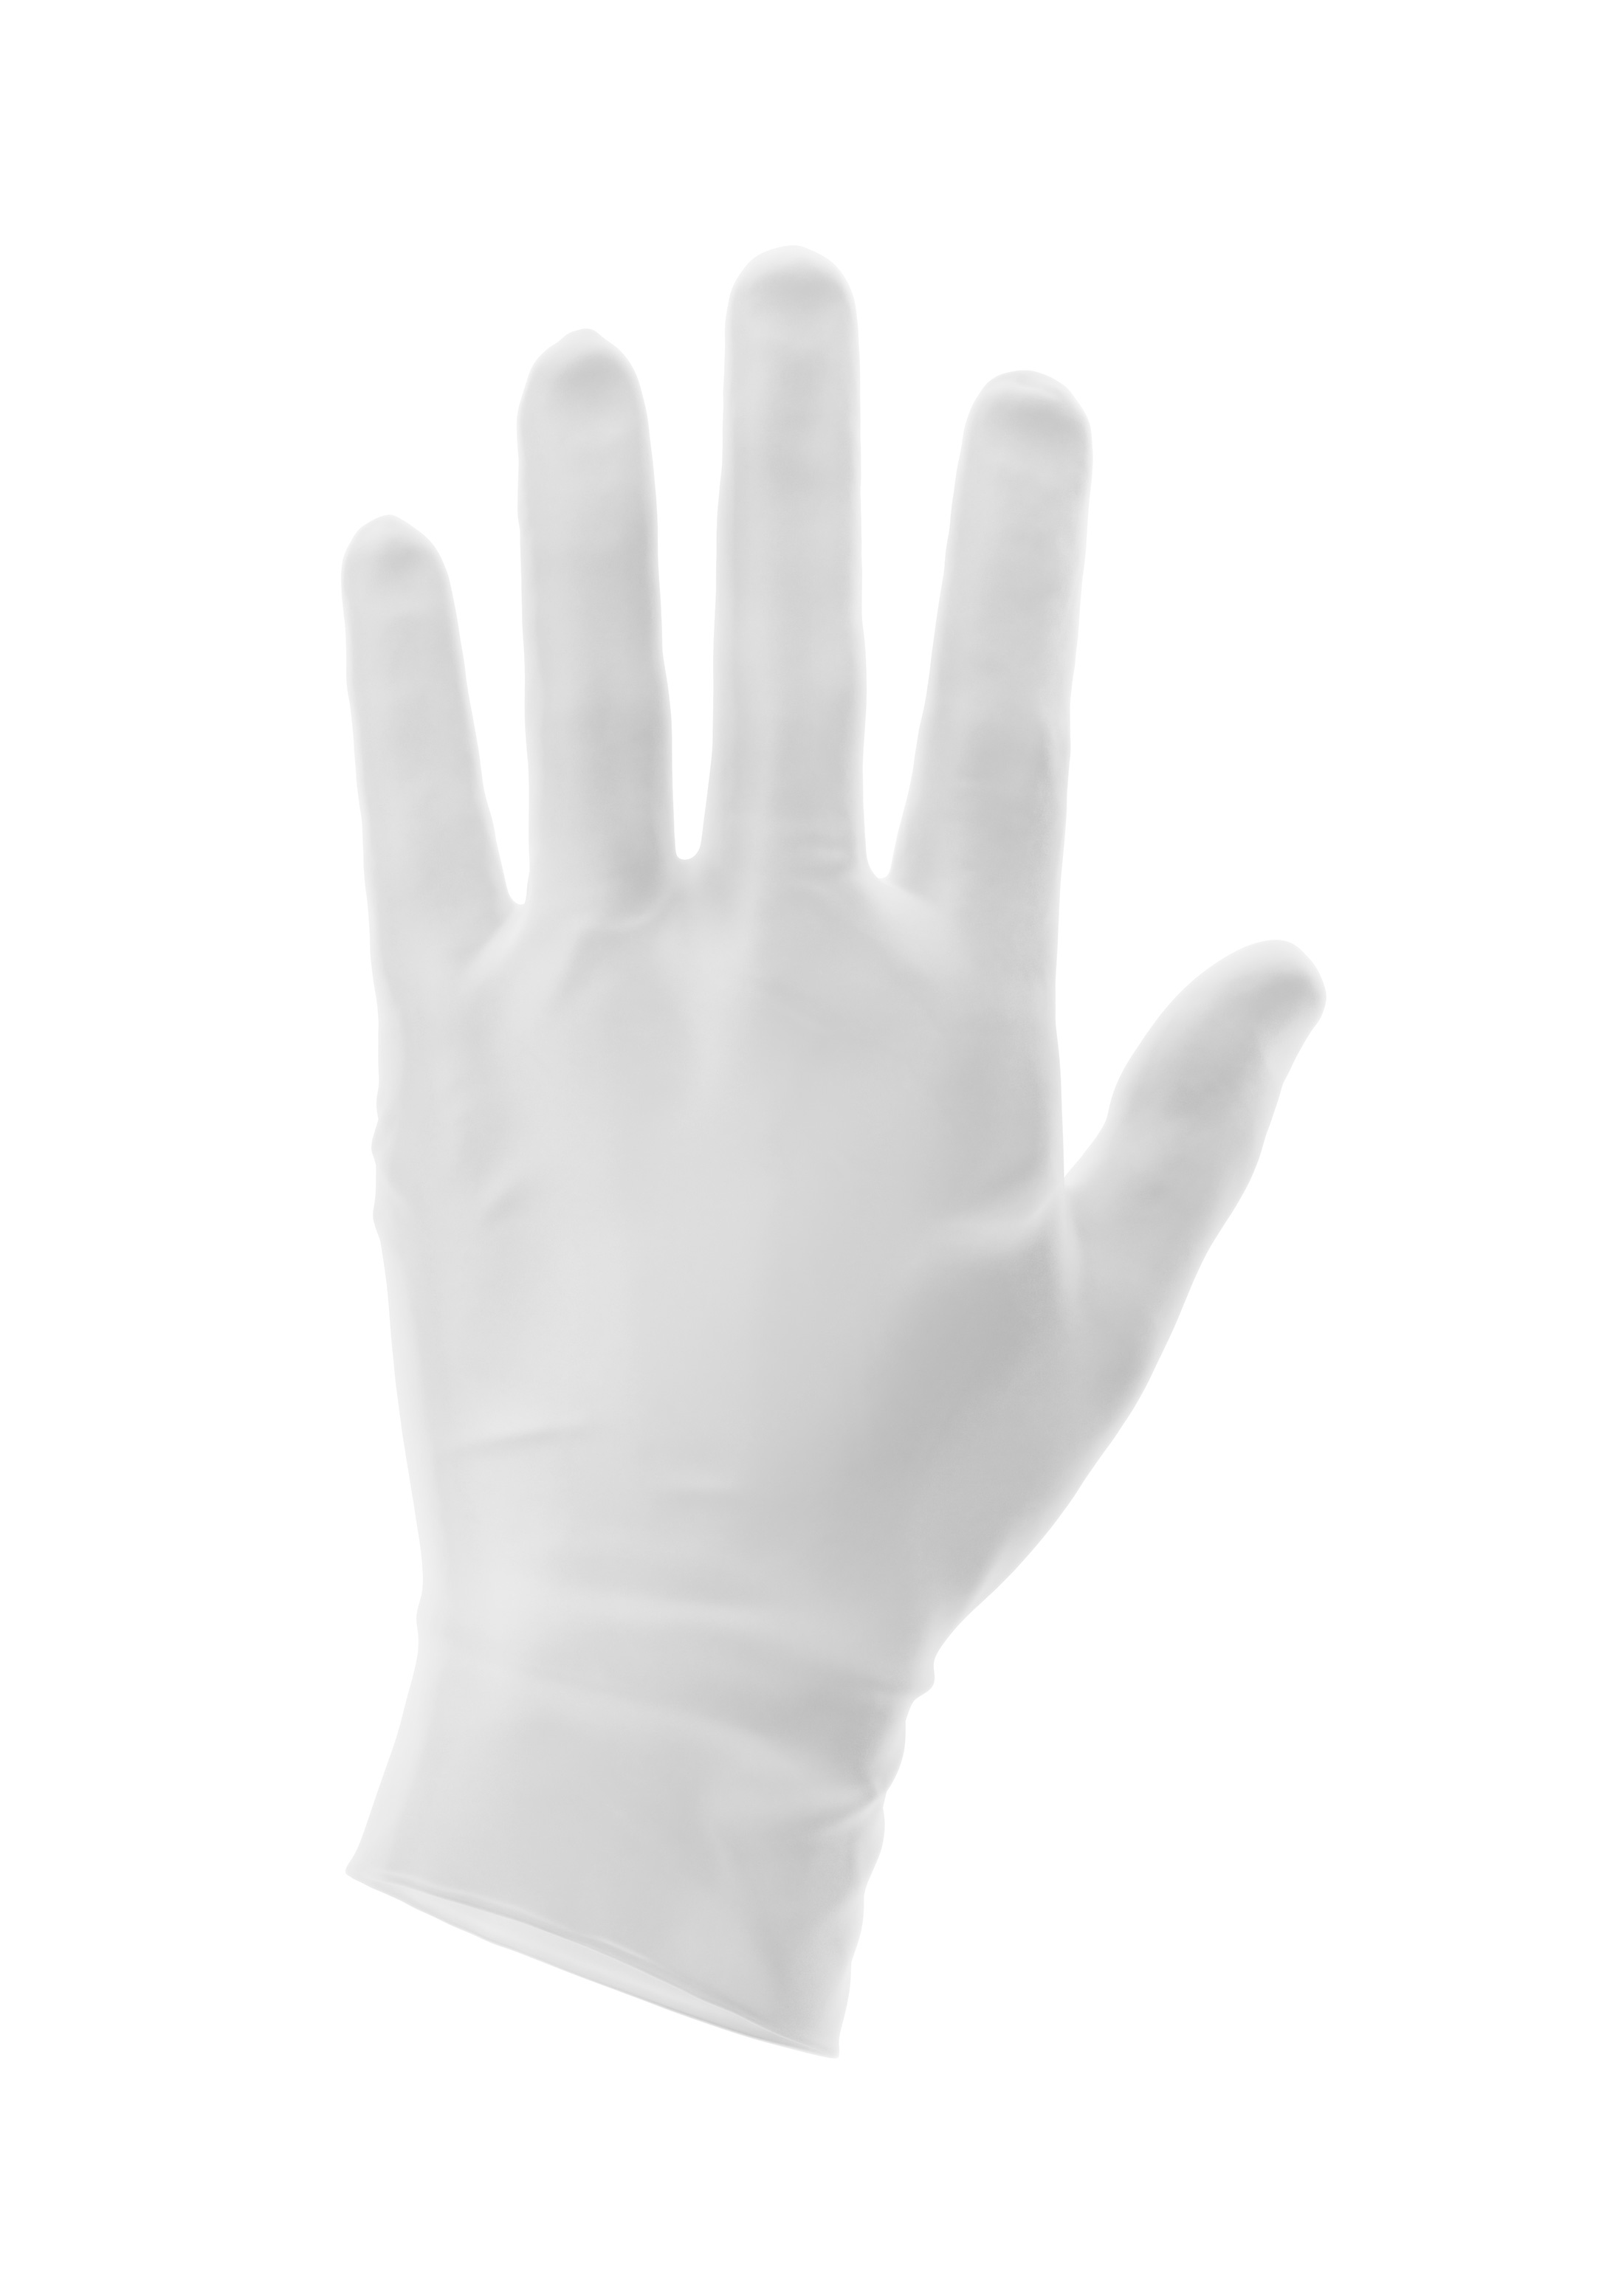 Demotek Surgical Gloves branding left hand kommigraphics